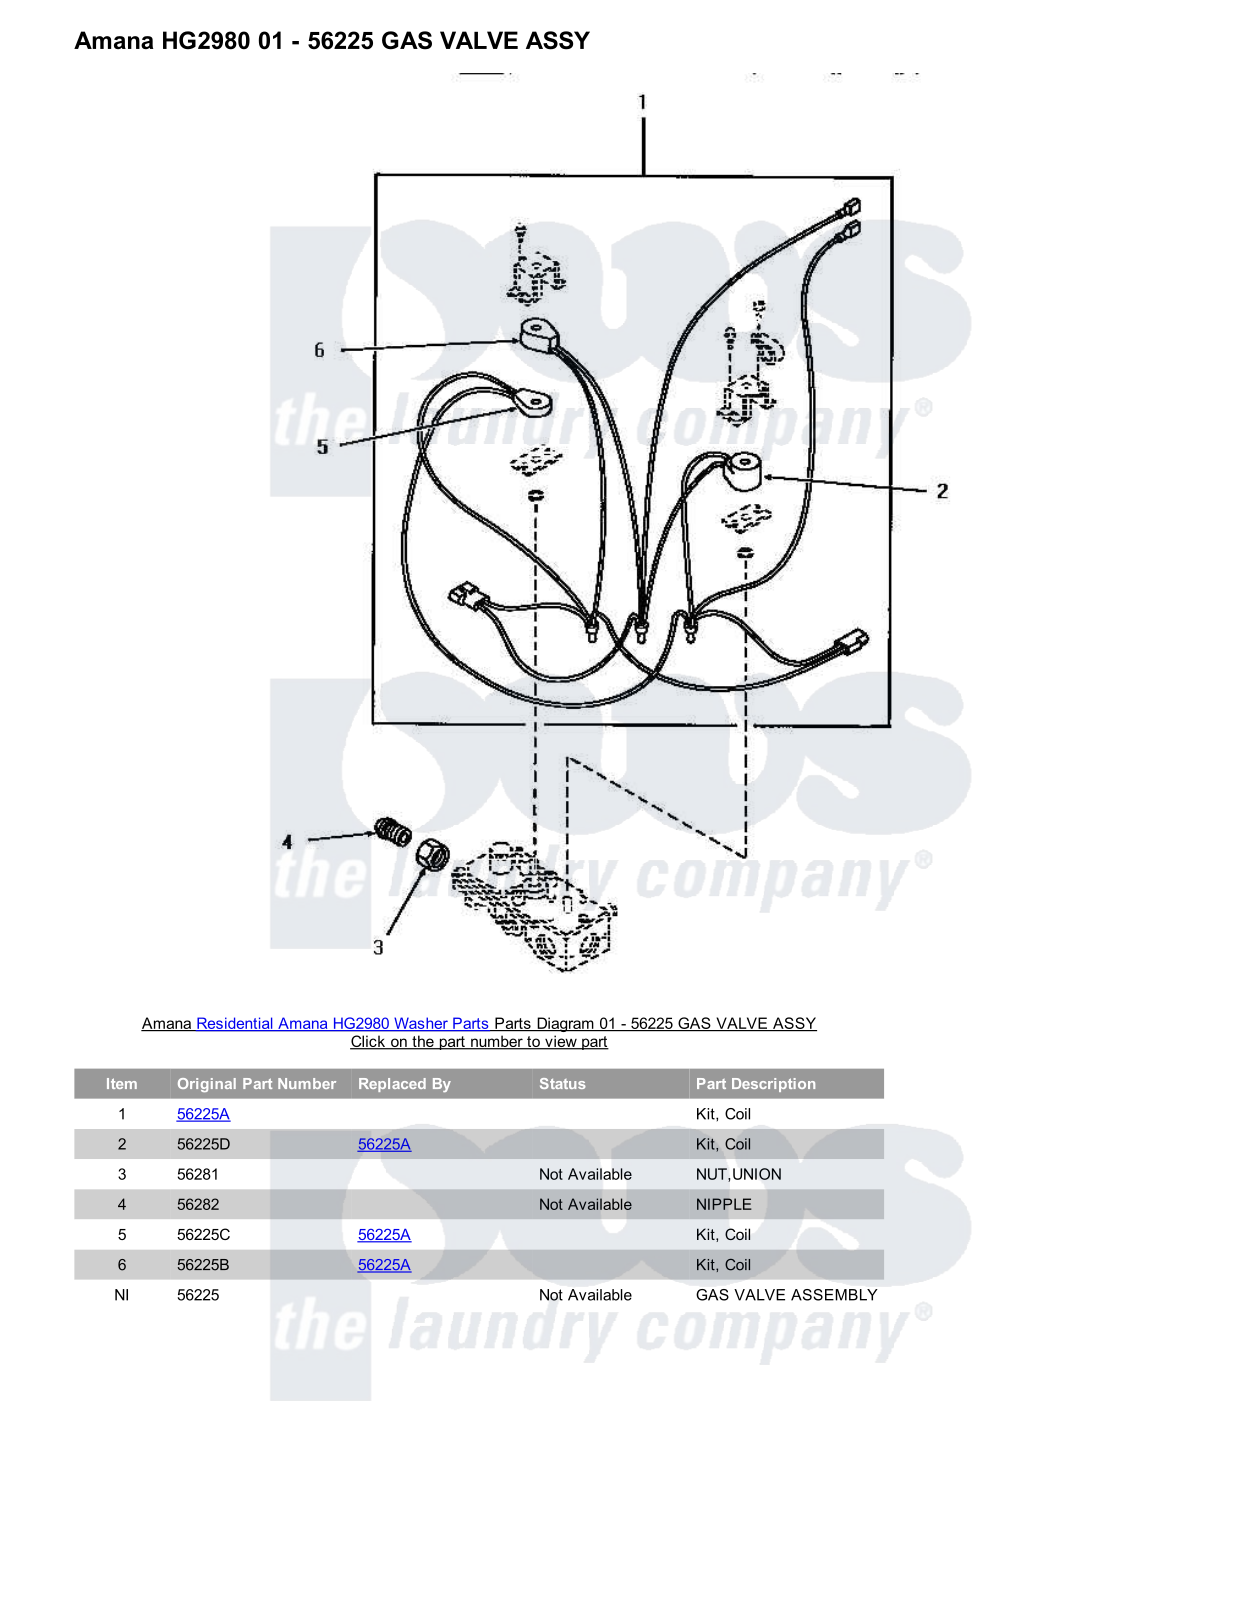 Amana HG2980 Parts Diagram